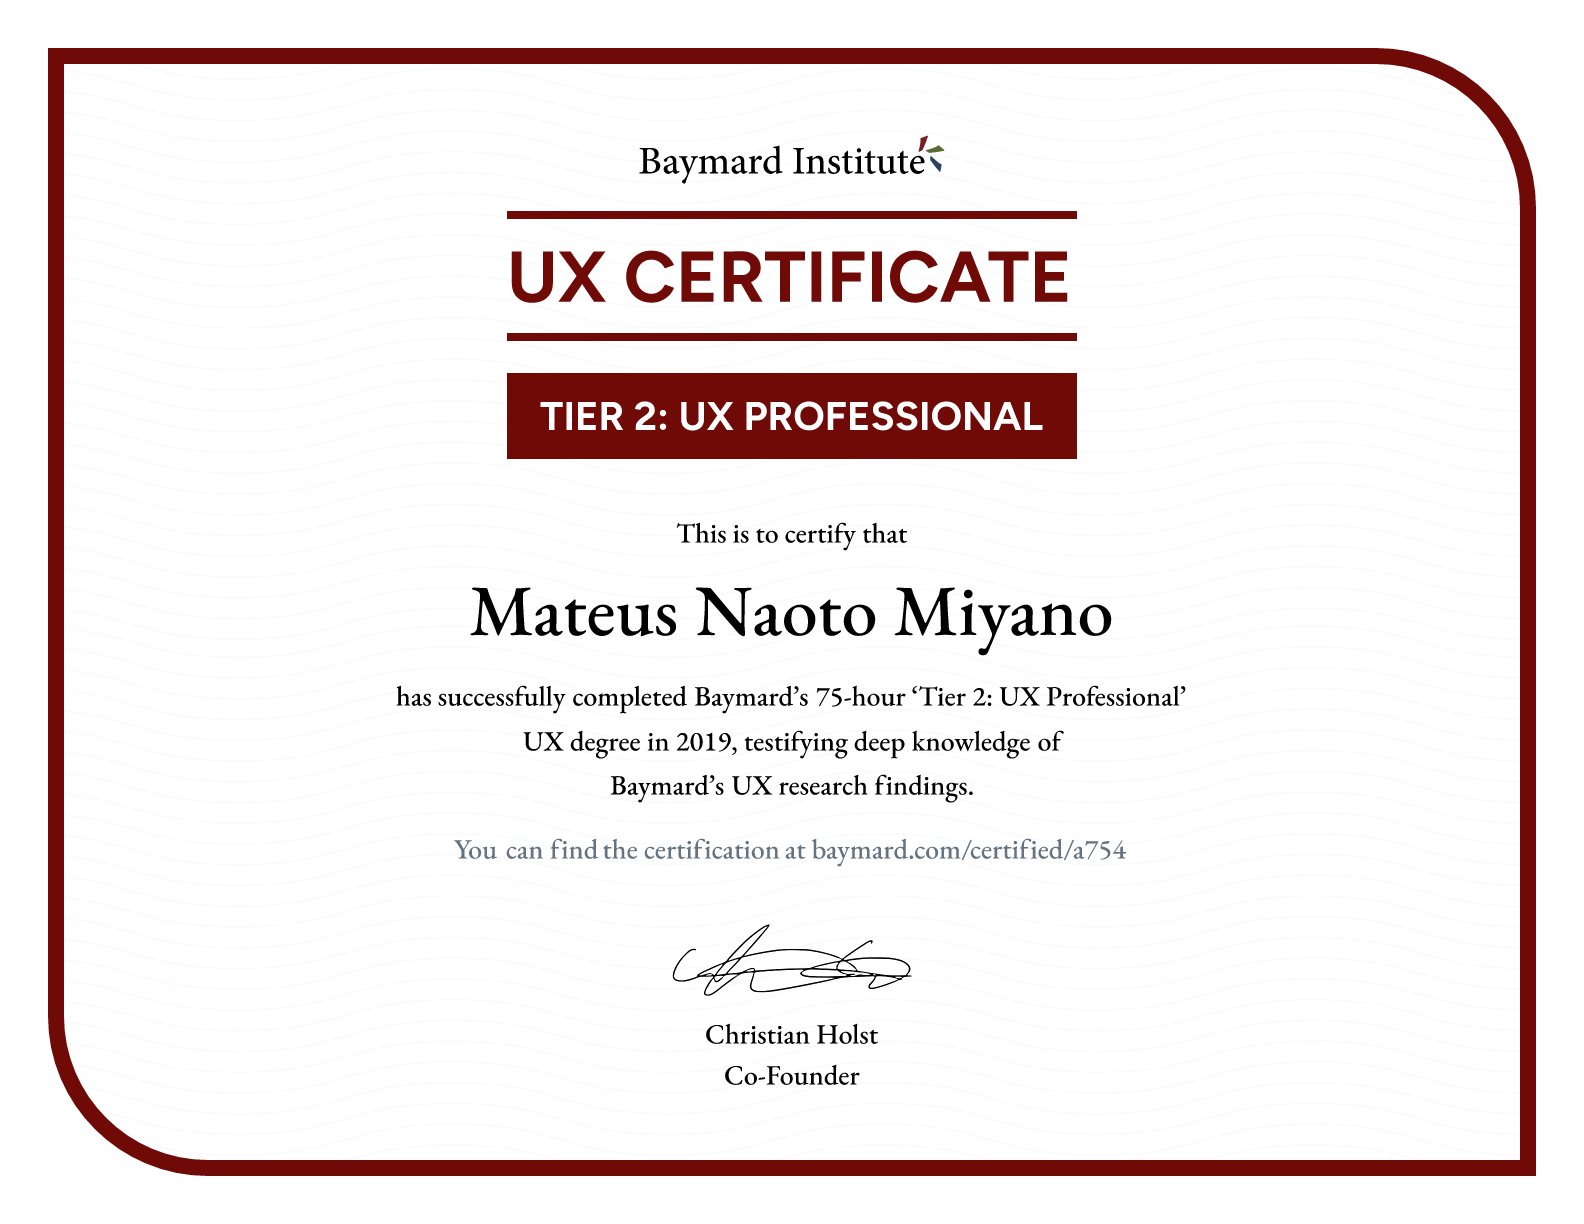 Mateus Naoto Miyano’s certificate